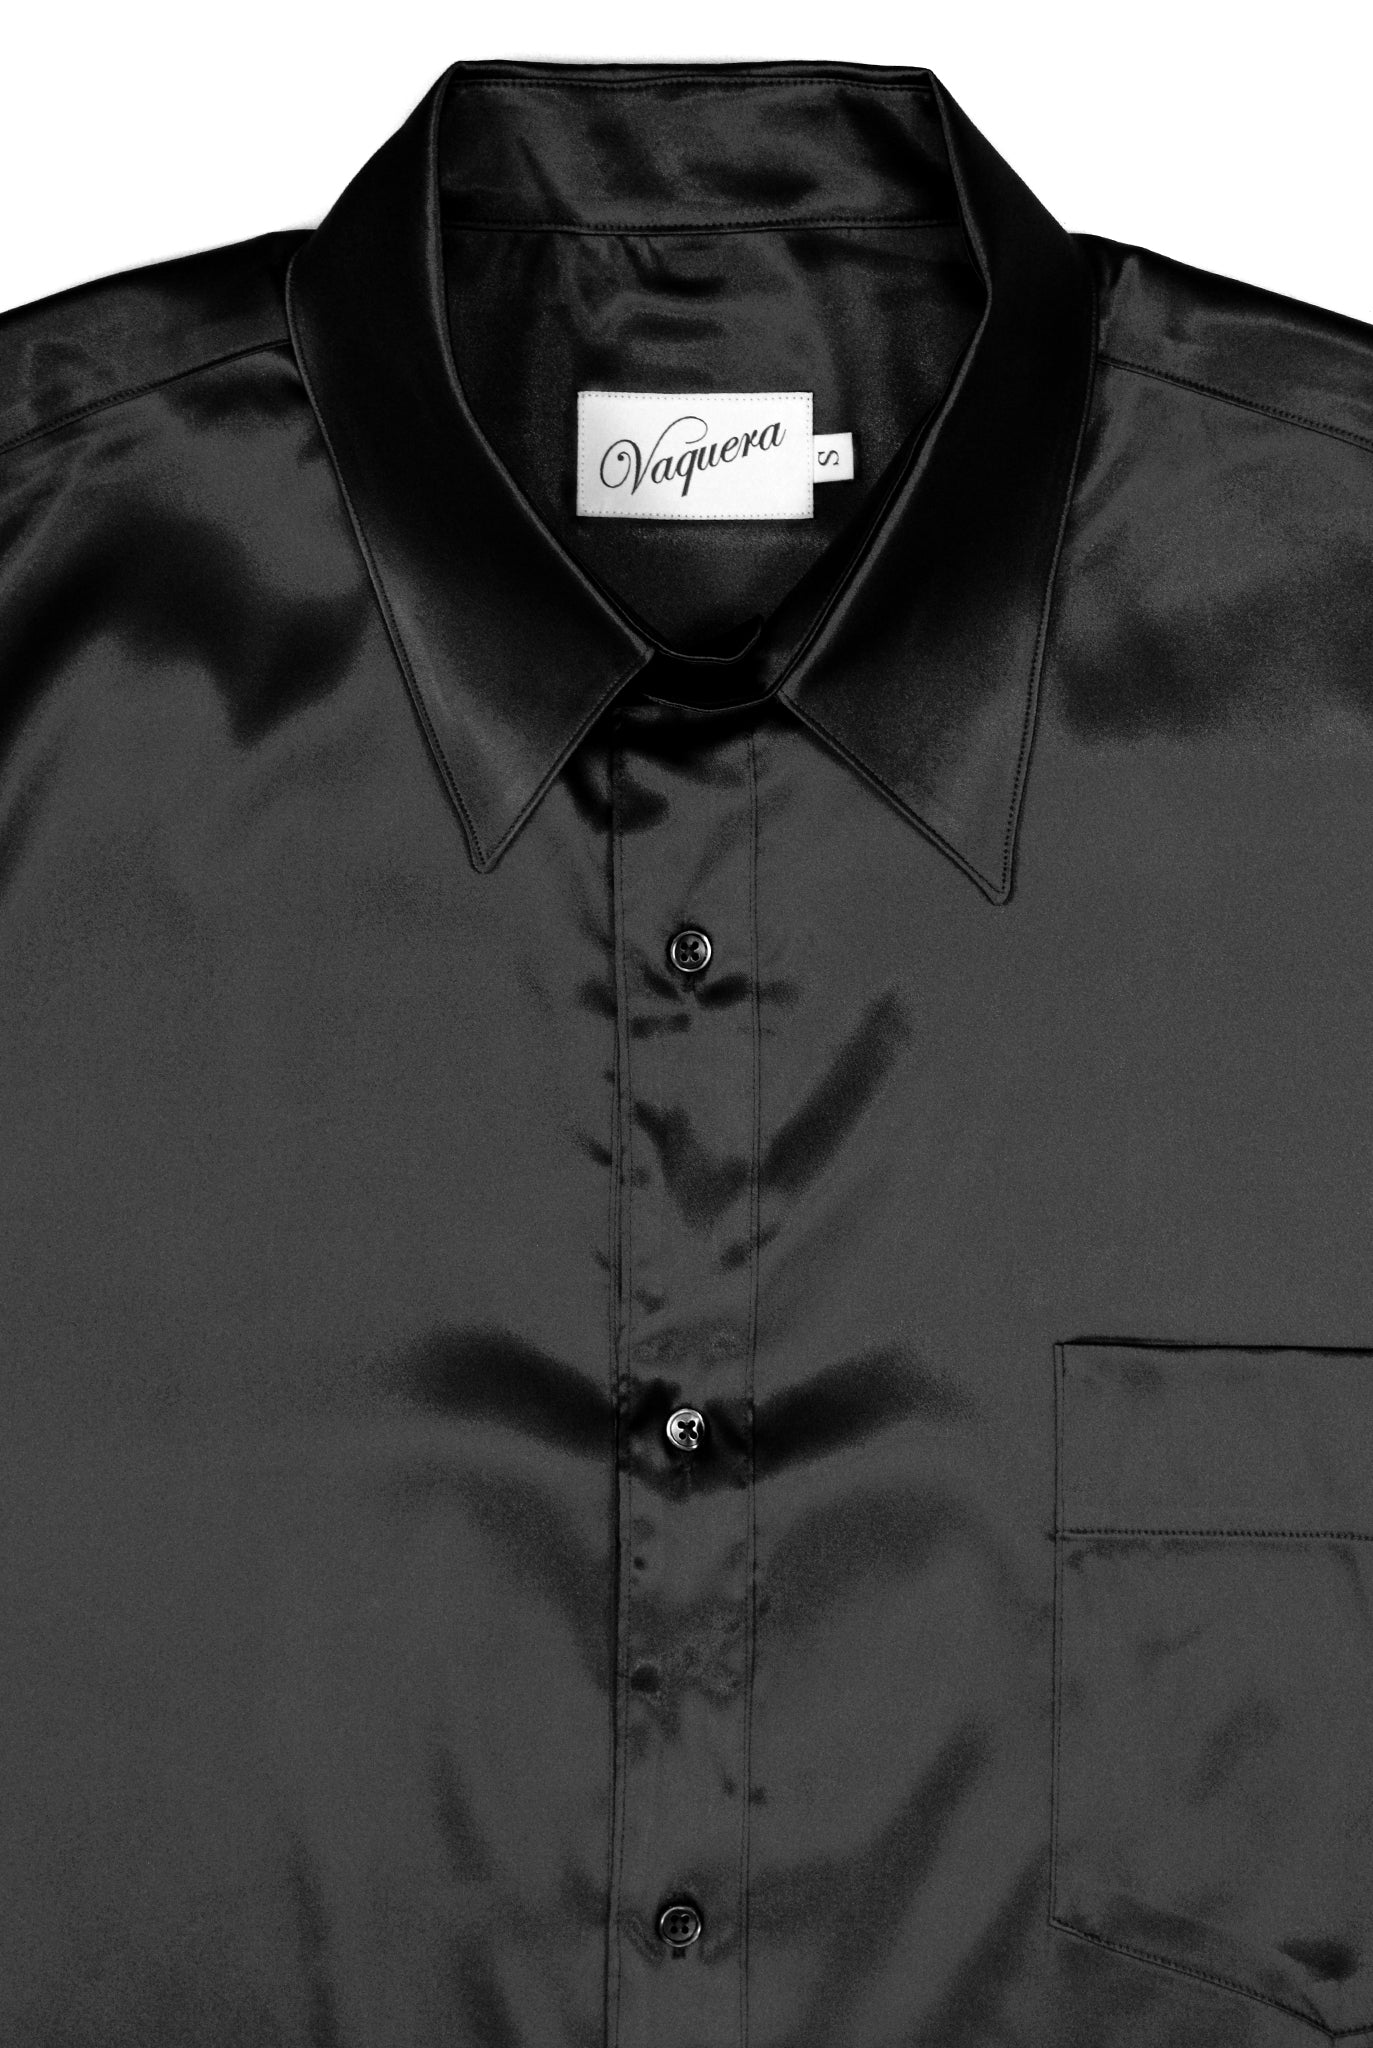 Vaquera Shirt & Tie, Black